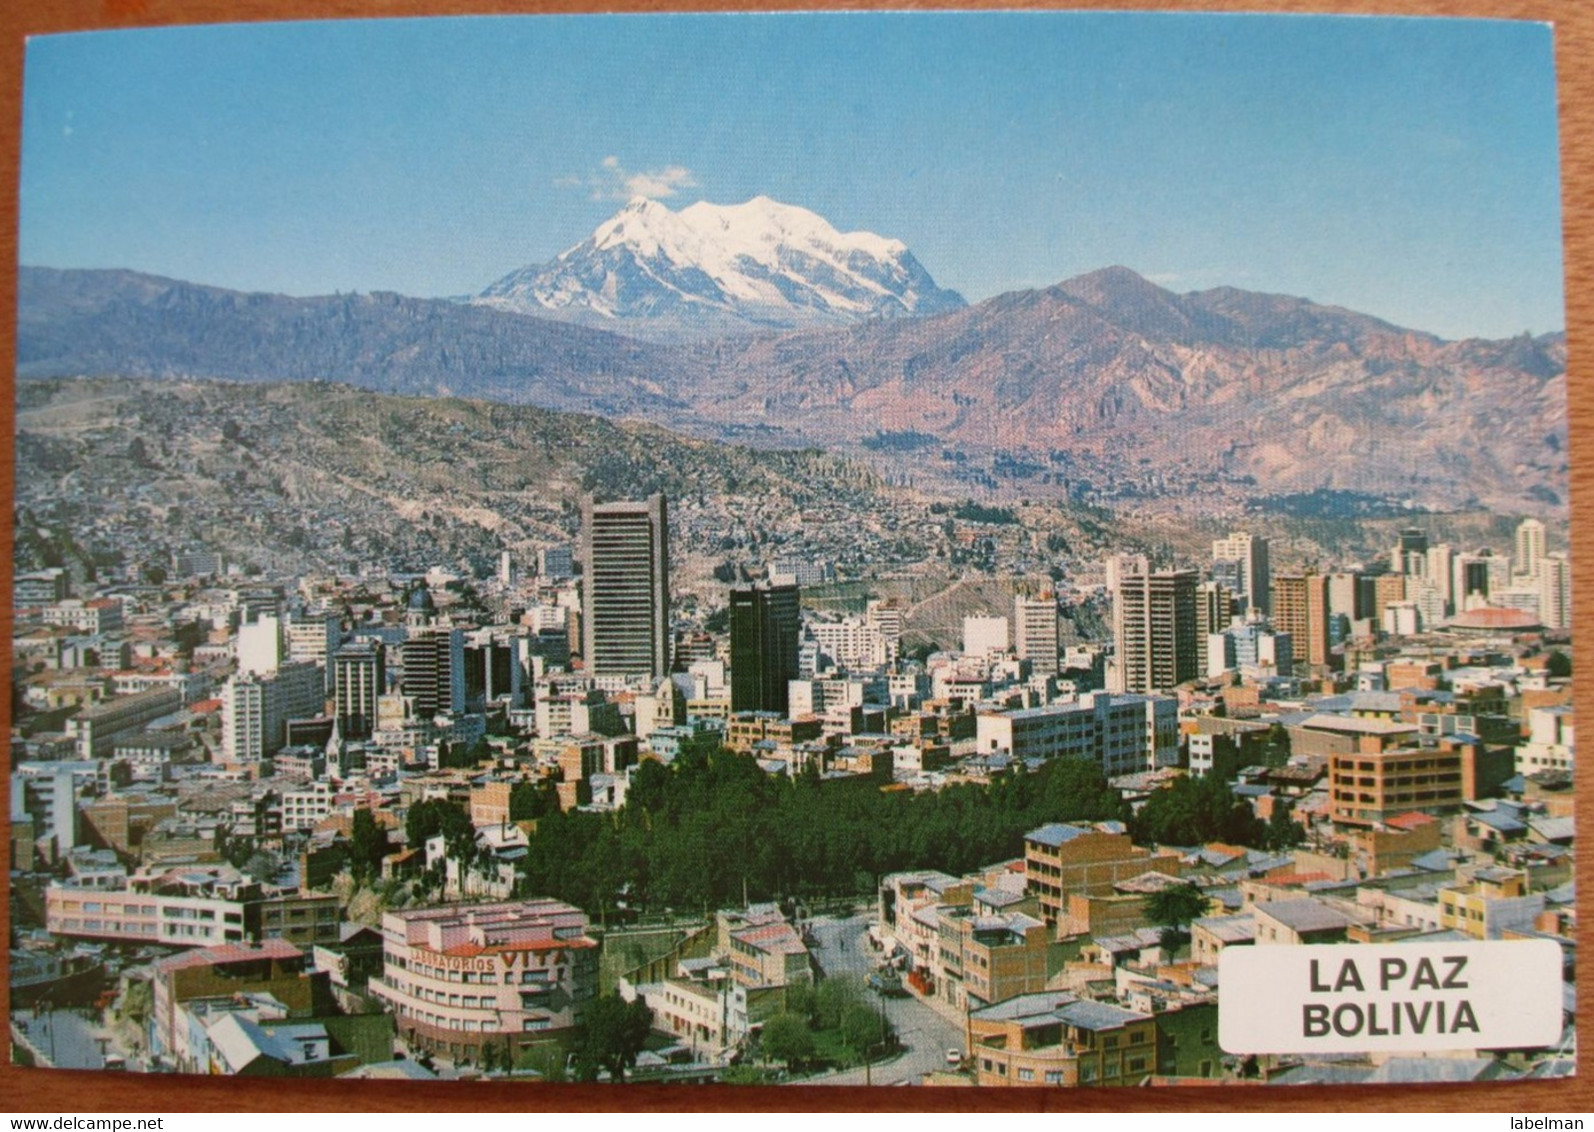 BOLIVIA LA PAZ PC CPA CPM ARCHITECTURE POSTCARD ANSICHTSKARTE PICTURE CARTOLINA PHOTO CARD - Horst